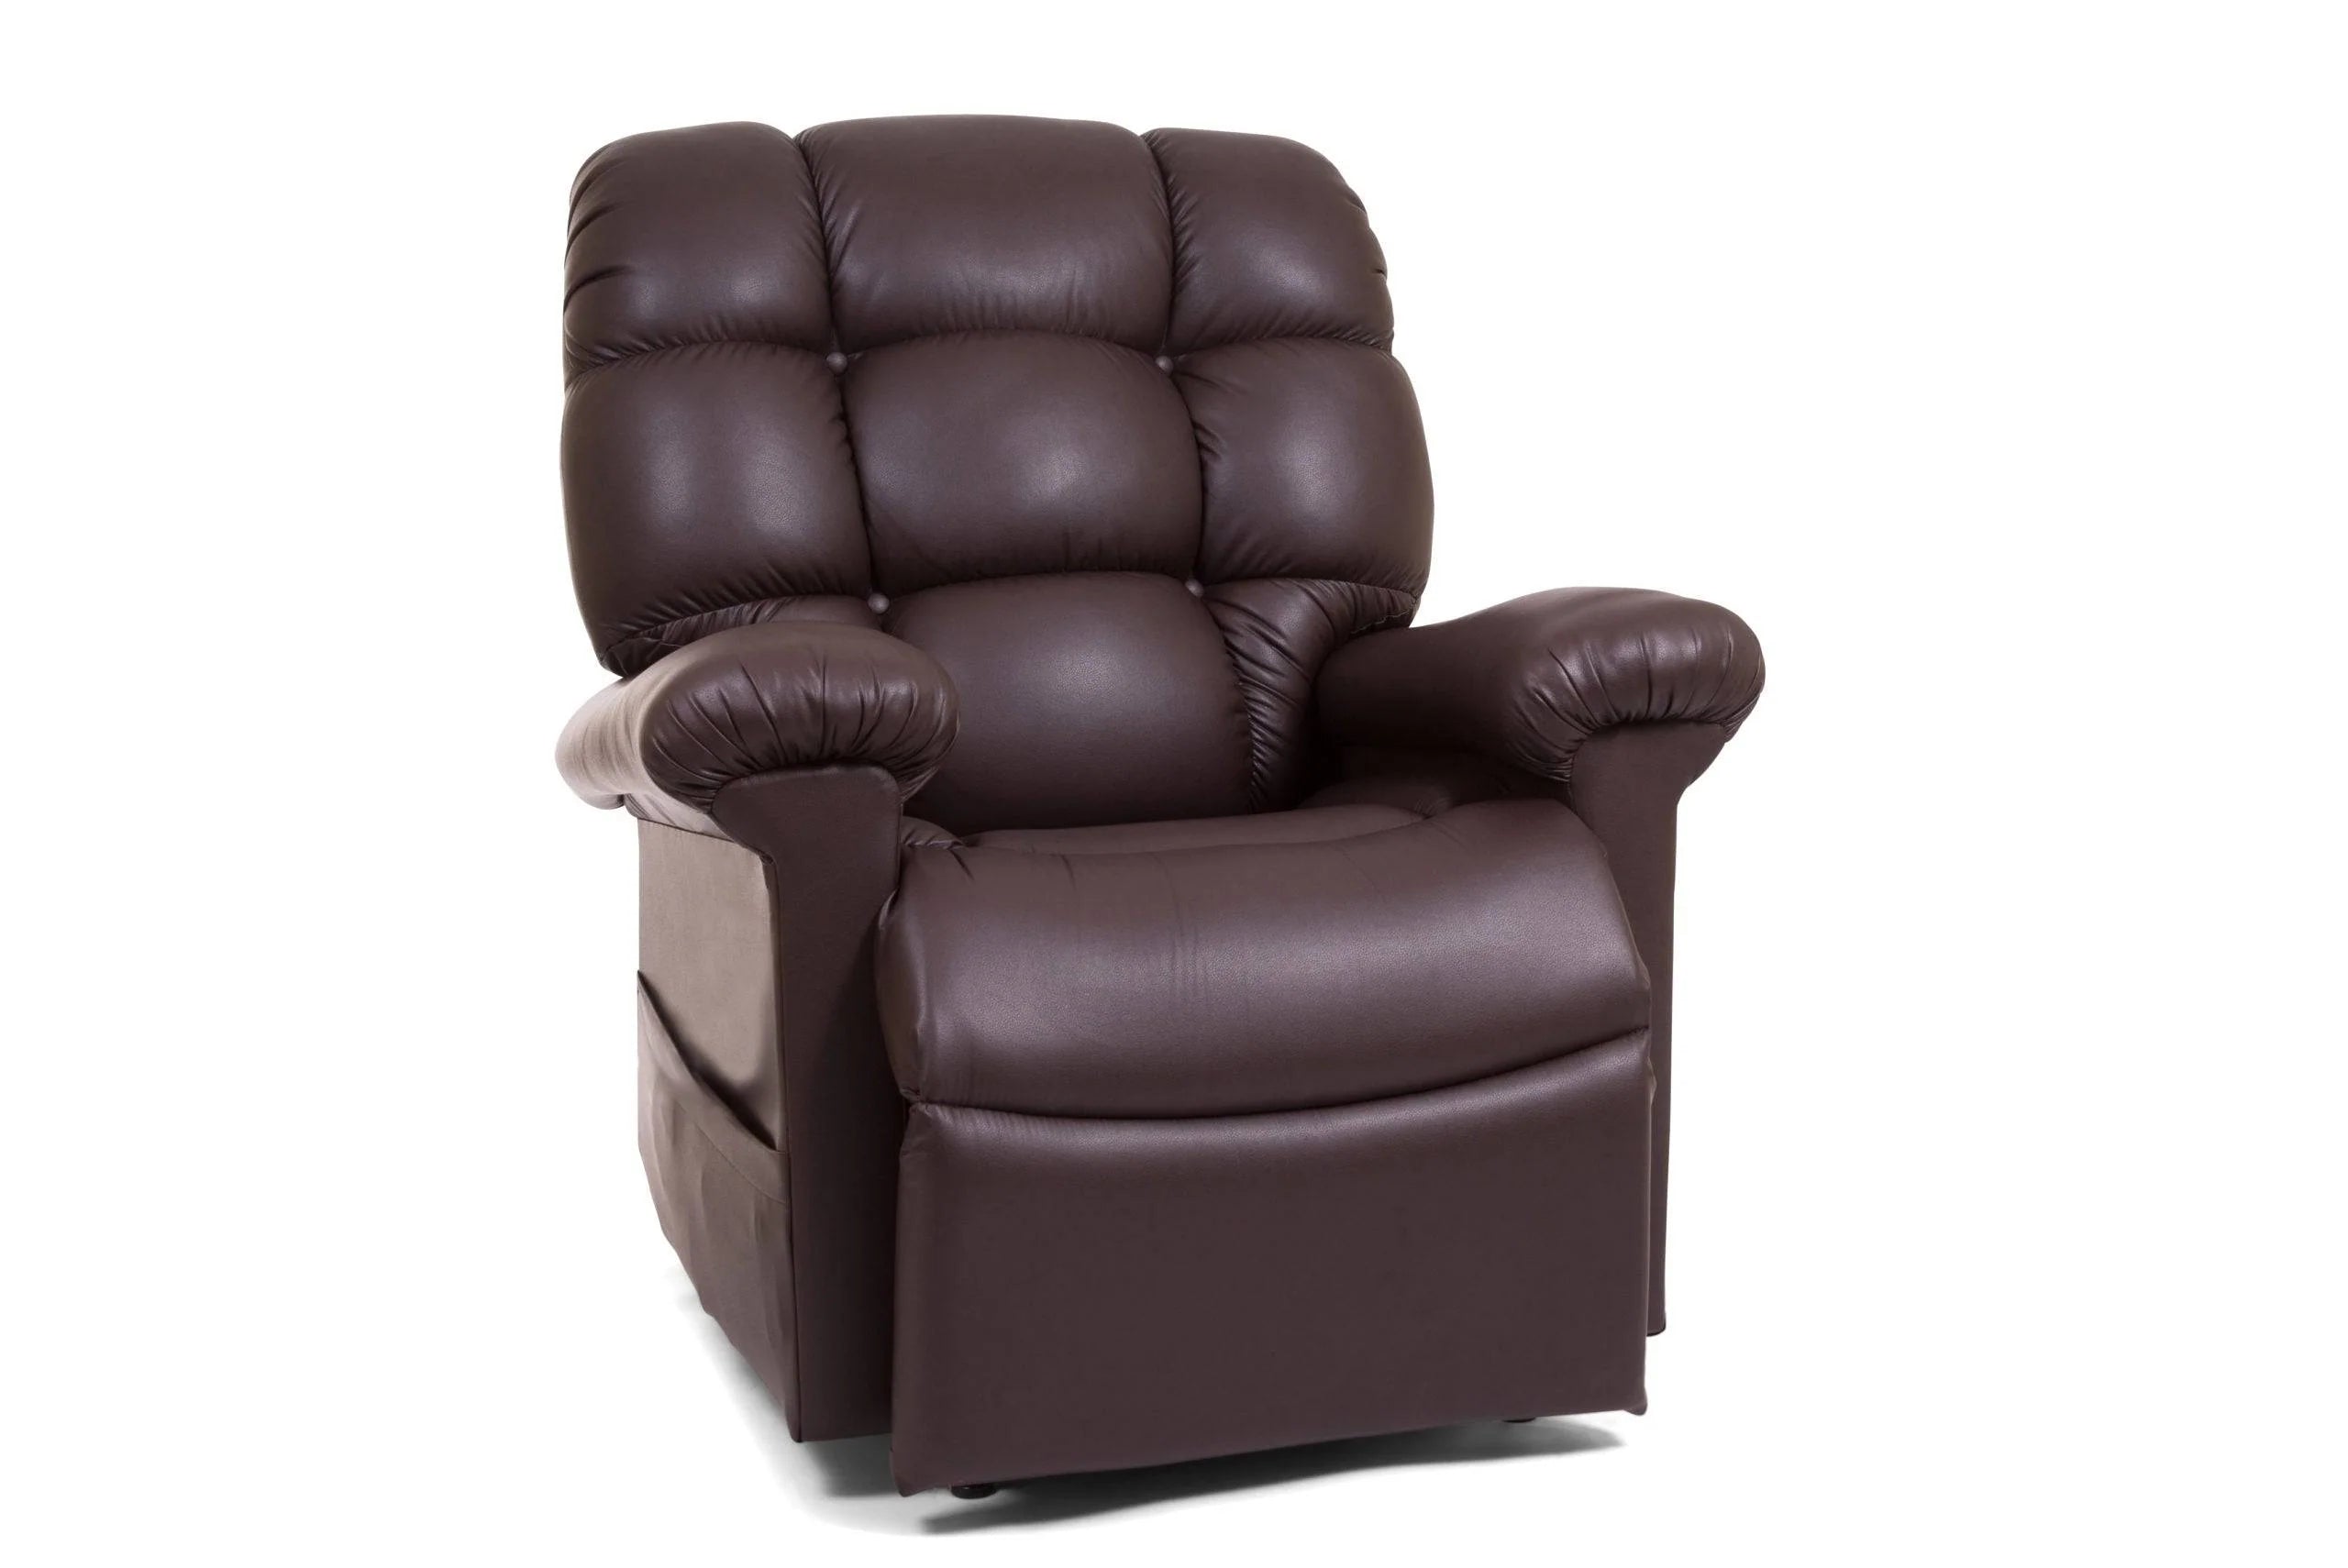 Cloud PR-515 Maxicomfort with twilight- Luxury Lift Chair-  Coffee Bean Brisa